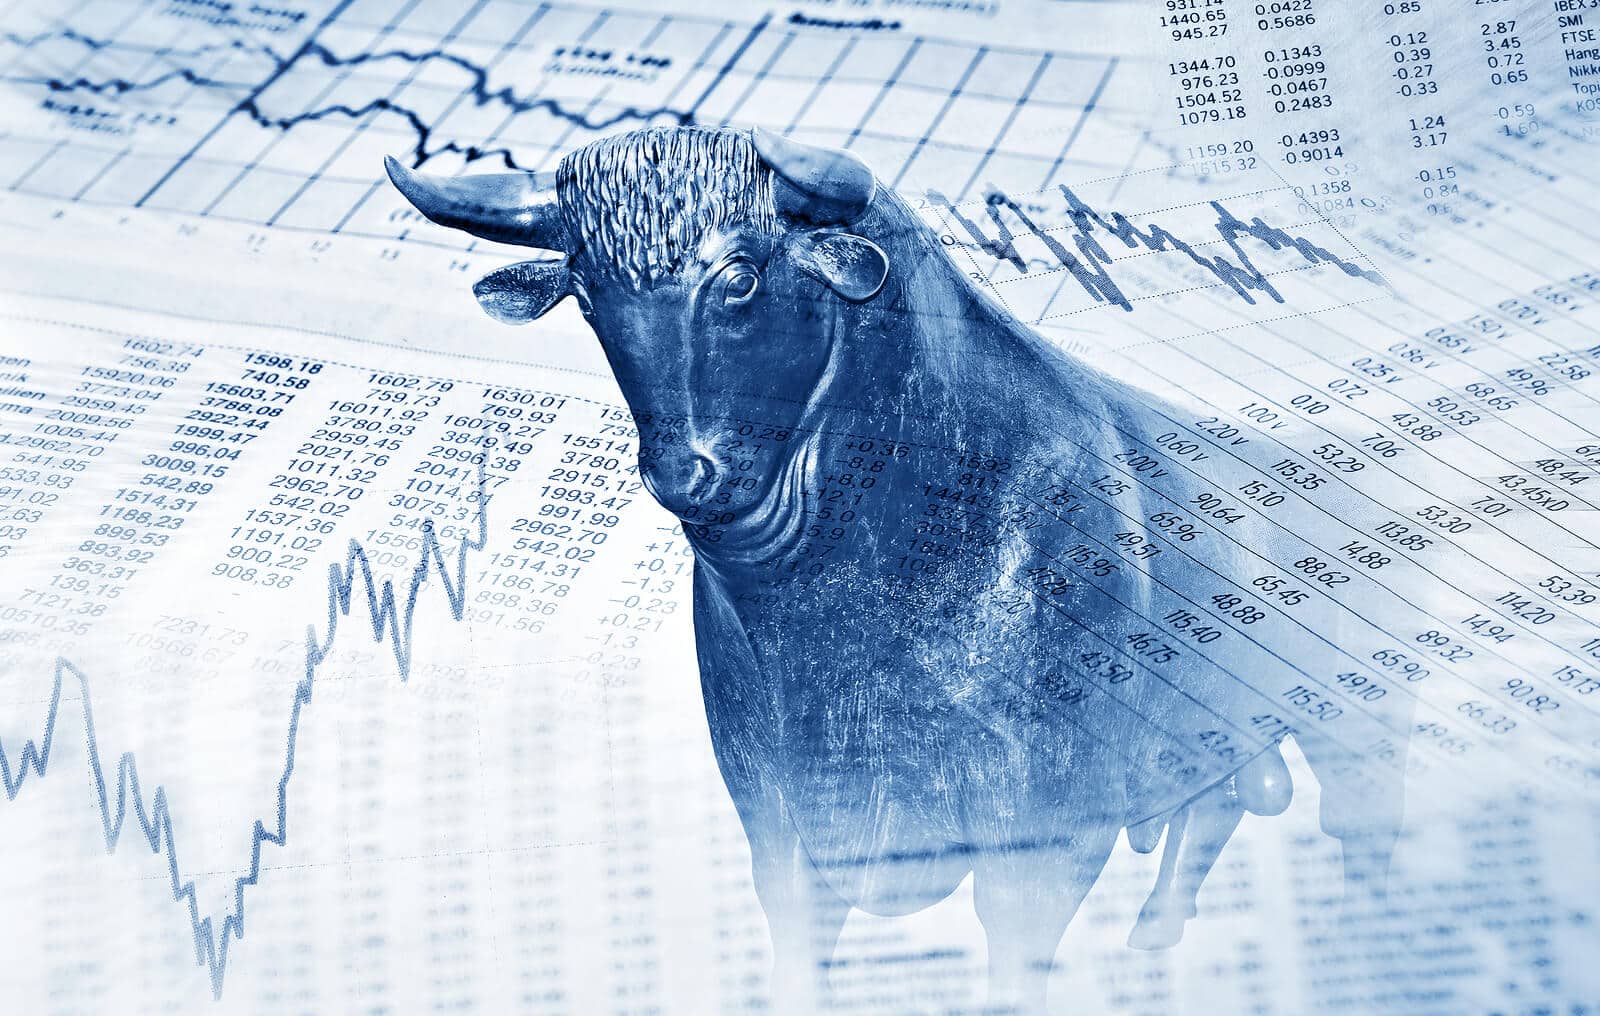 Bull Market Reaches 10th Anniversary